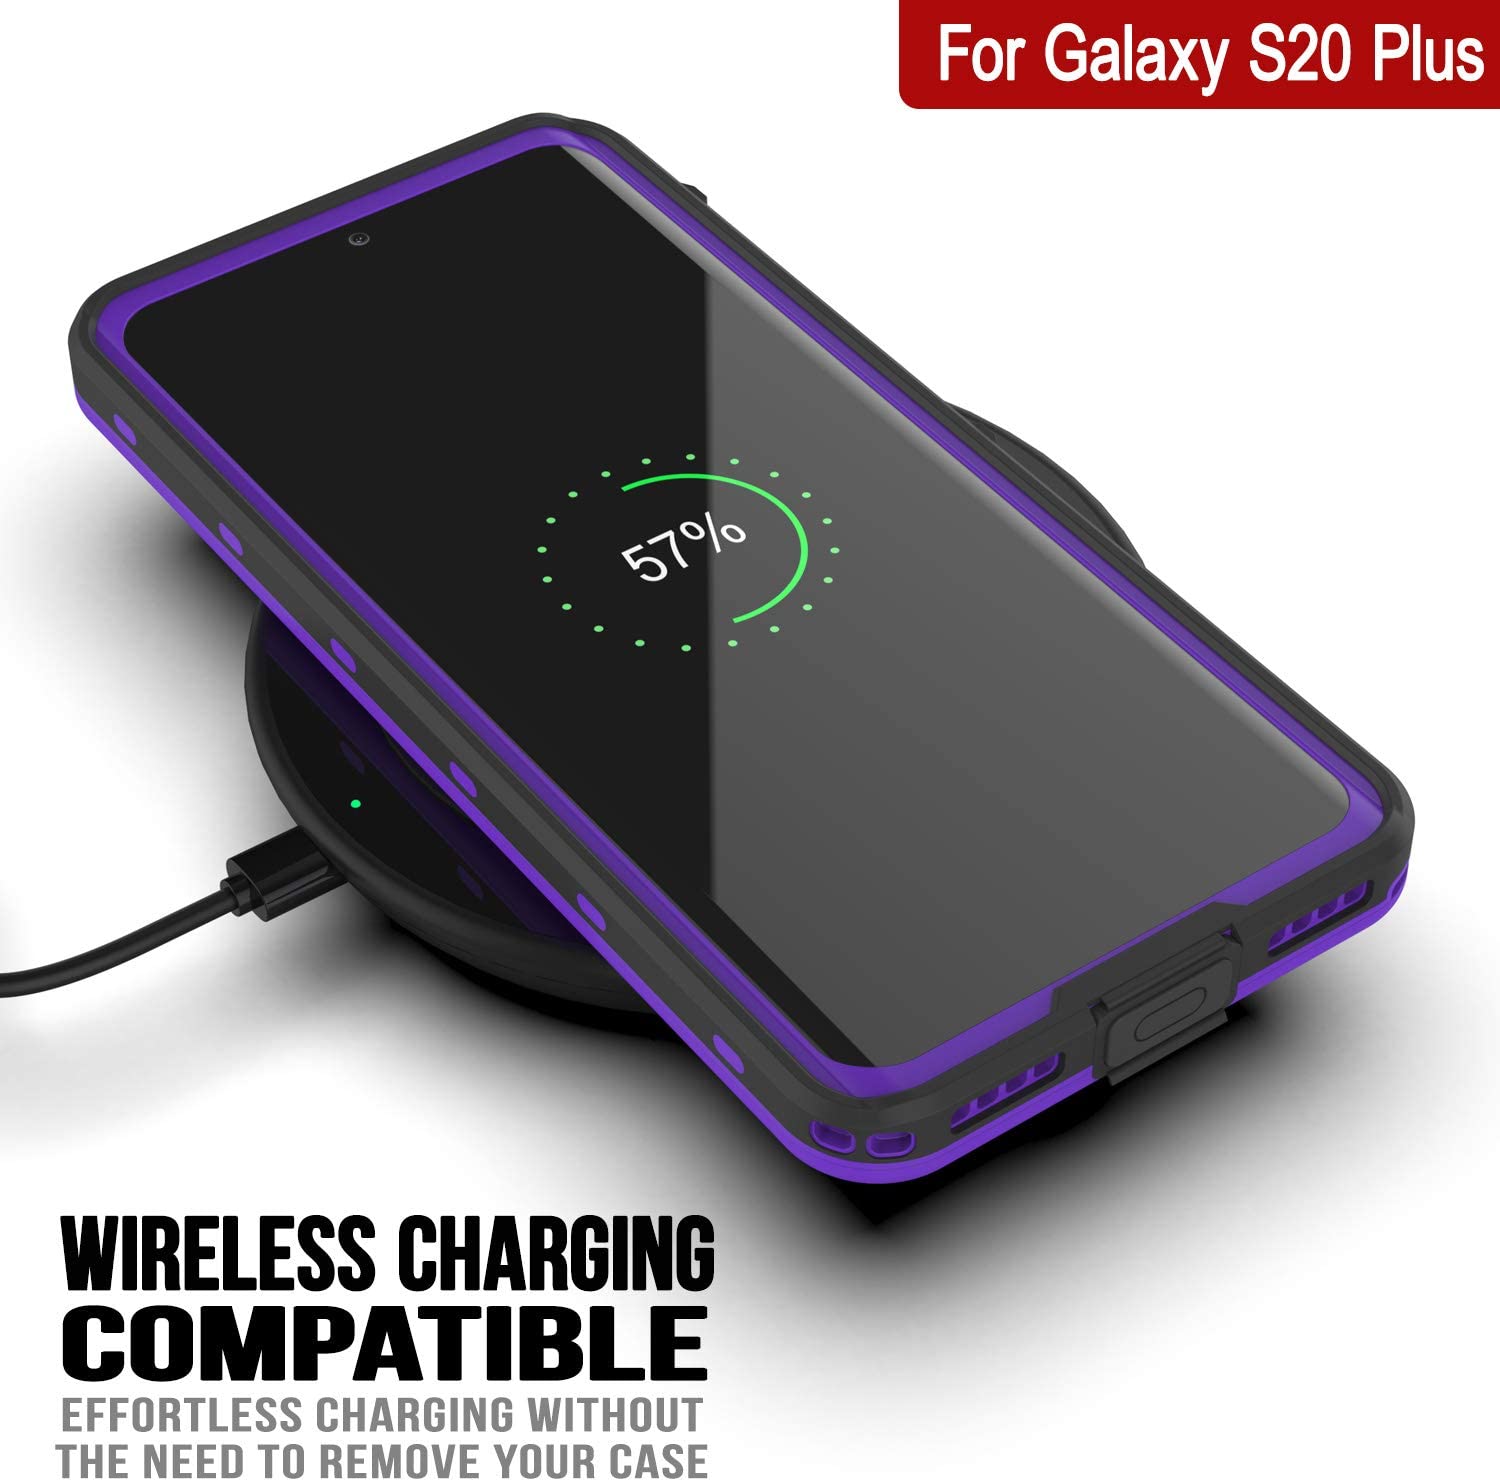 Galaxy S20+ Plus Waterproof Case, Punkcase [KickStud Series] Armor Cover [Purple]